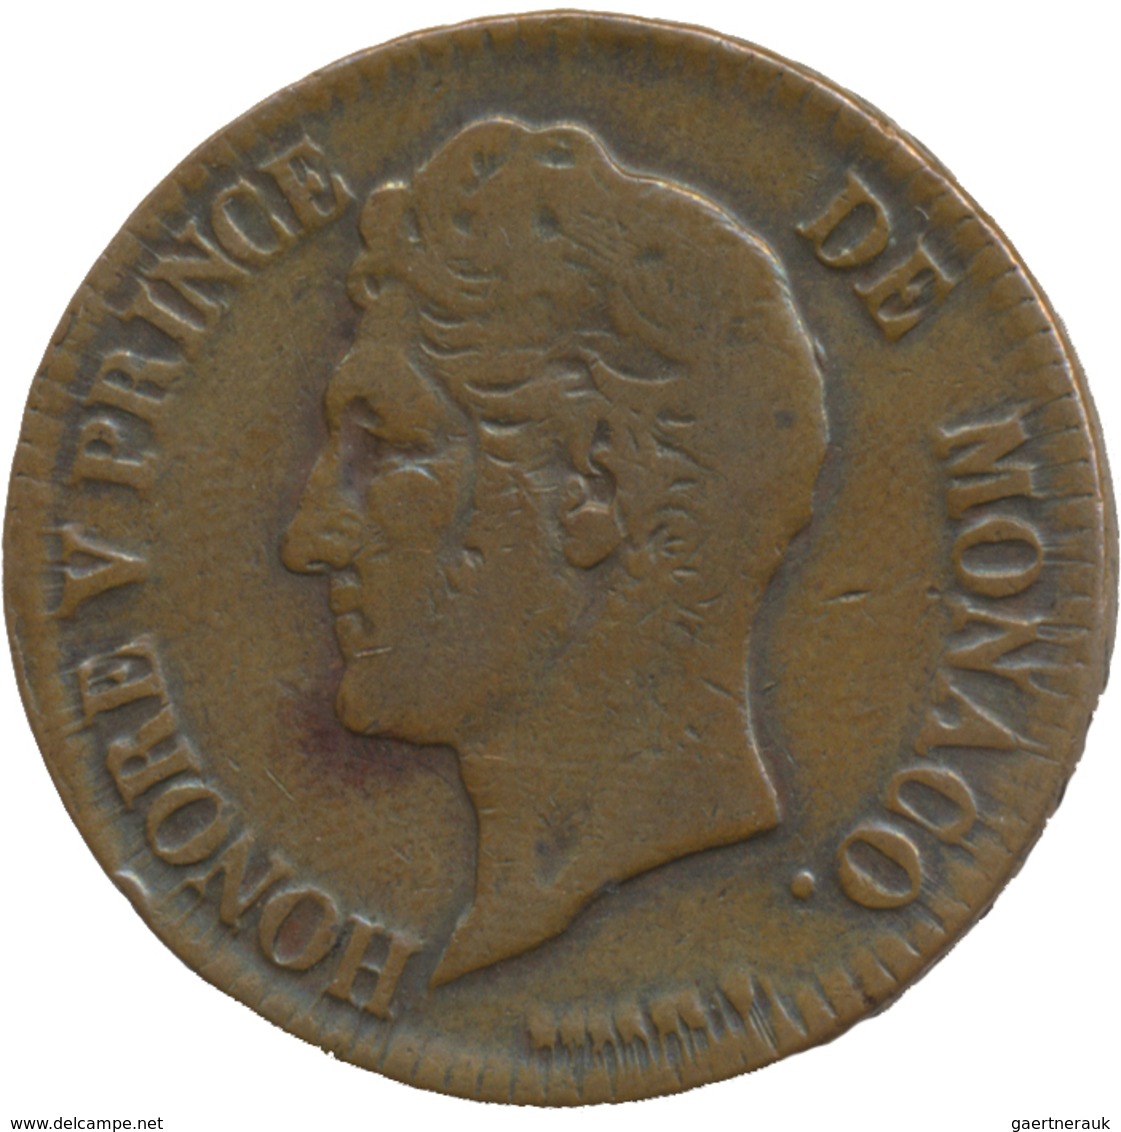 Monaco: Honoré V. 1819-1841: Lot 5 Stück; 2 x Un Décime 1838 und 3 x 5 Centimes 1837, schön-sehr sch